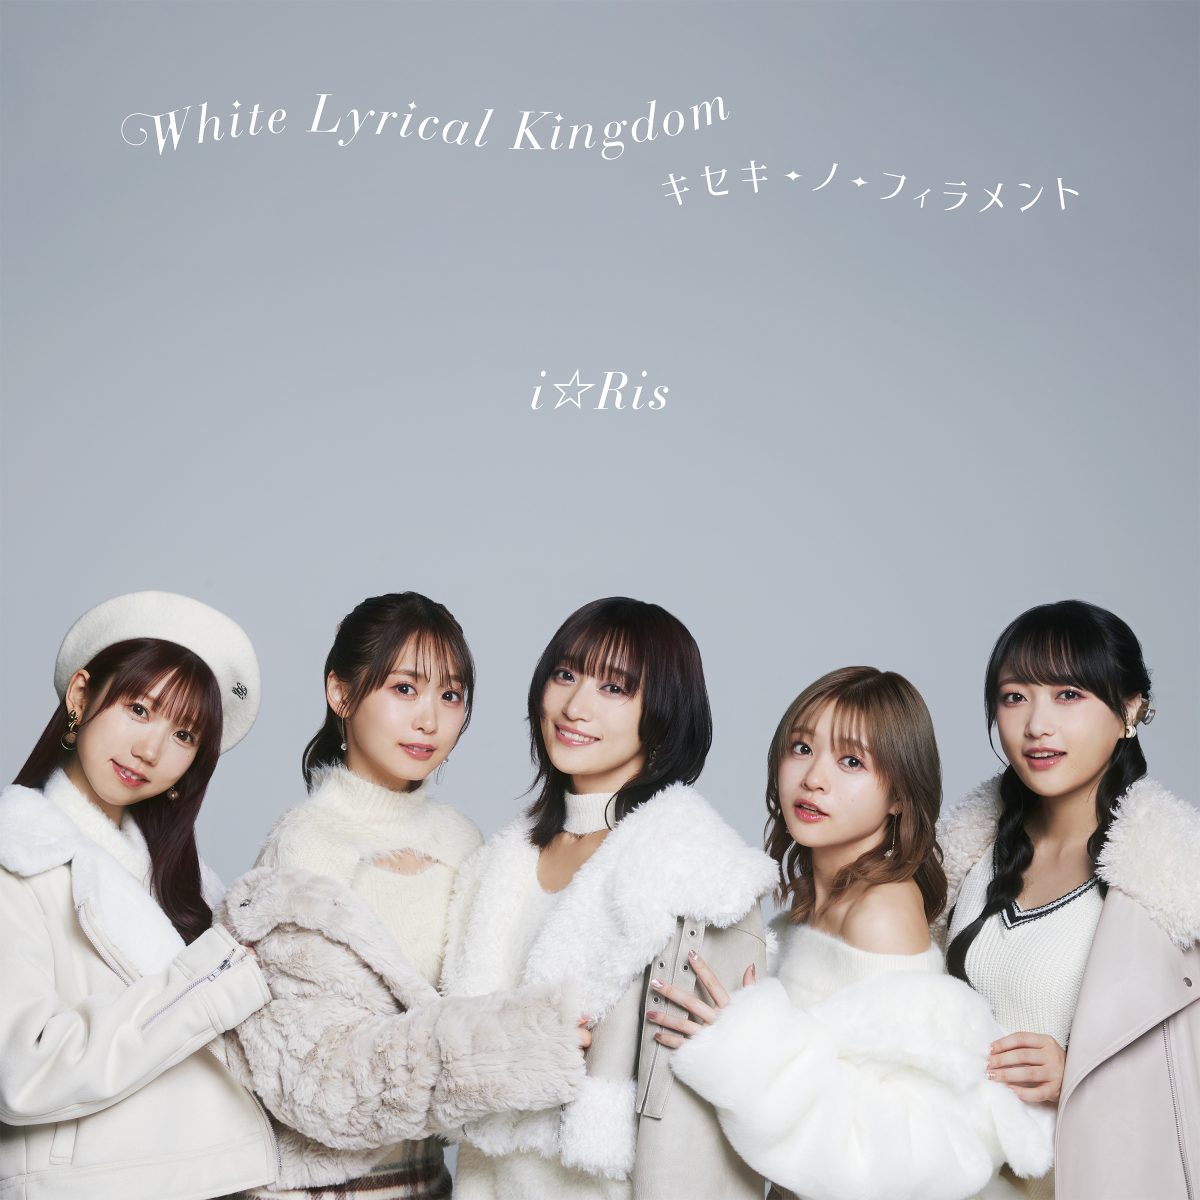 「White Lyrical Kingdom/キセキ-ノ-フィラメント」CD+DVD盤ジャケット